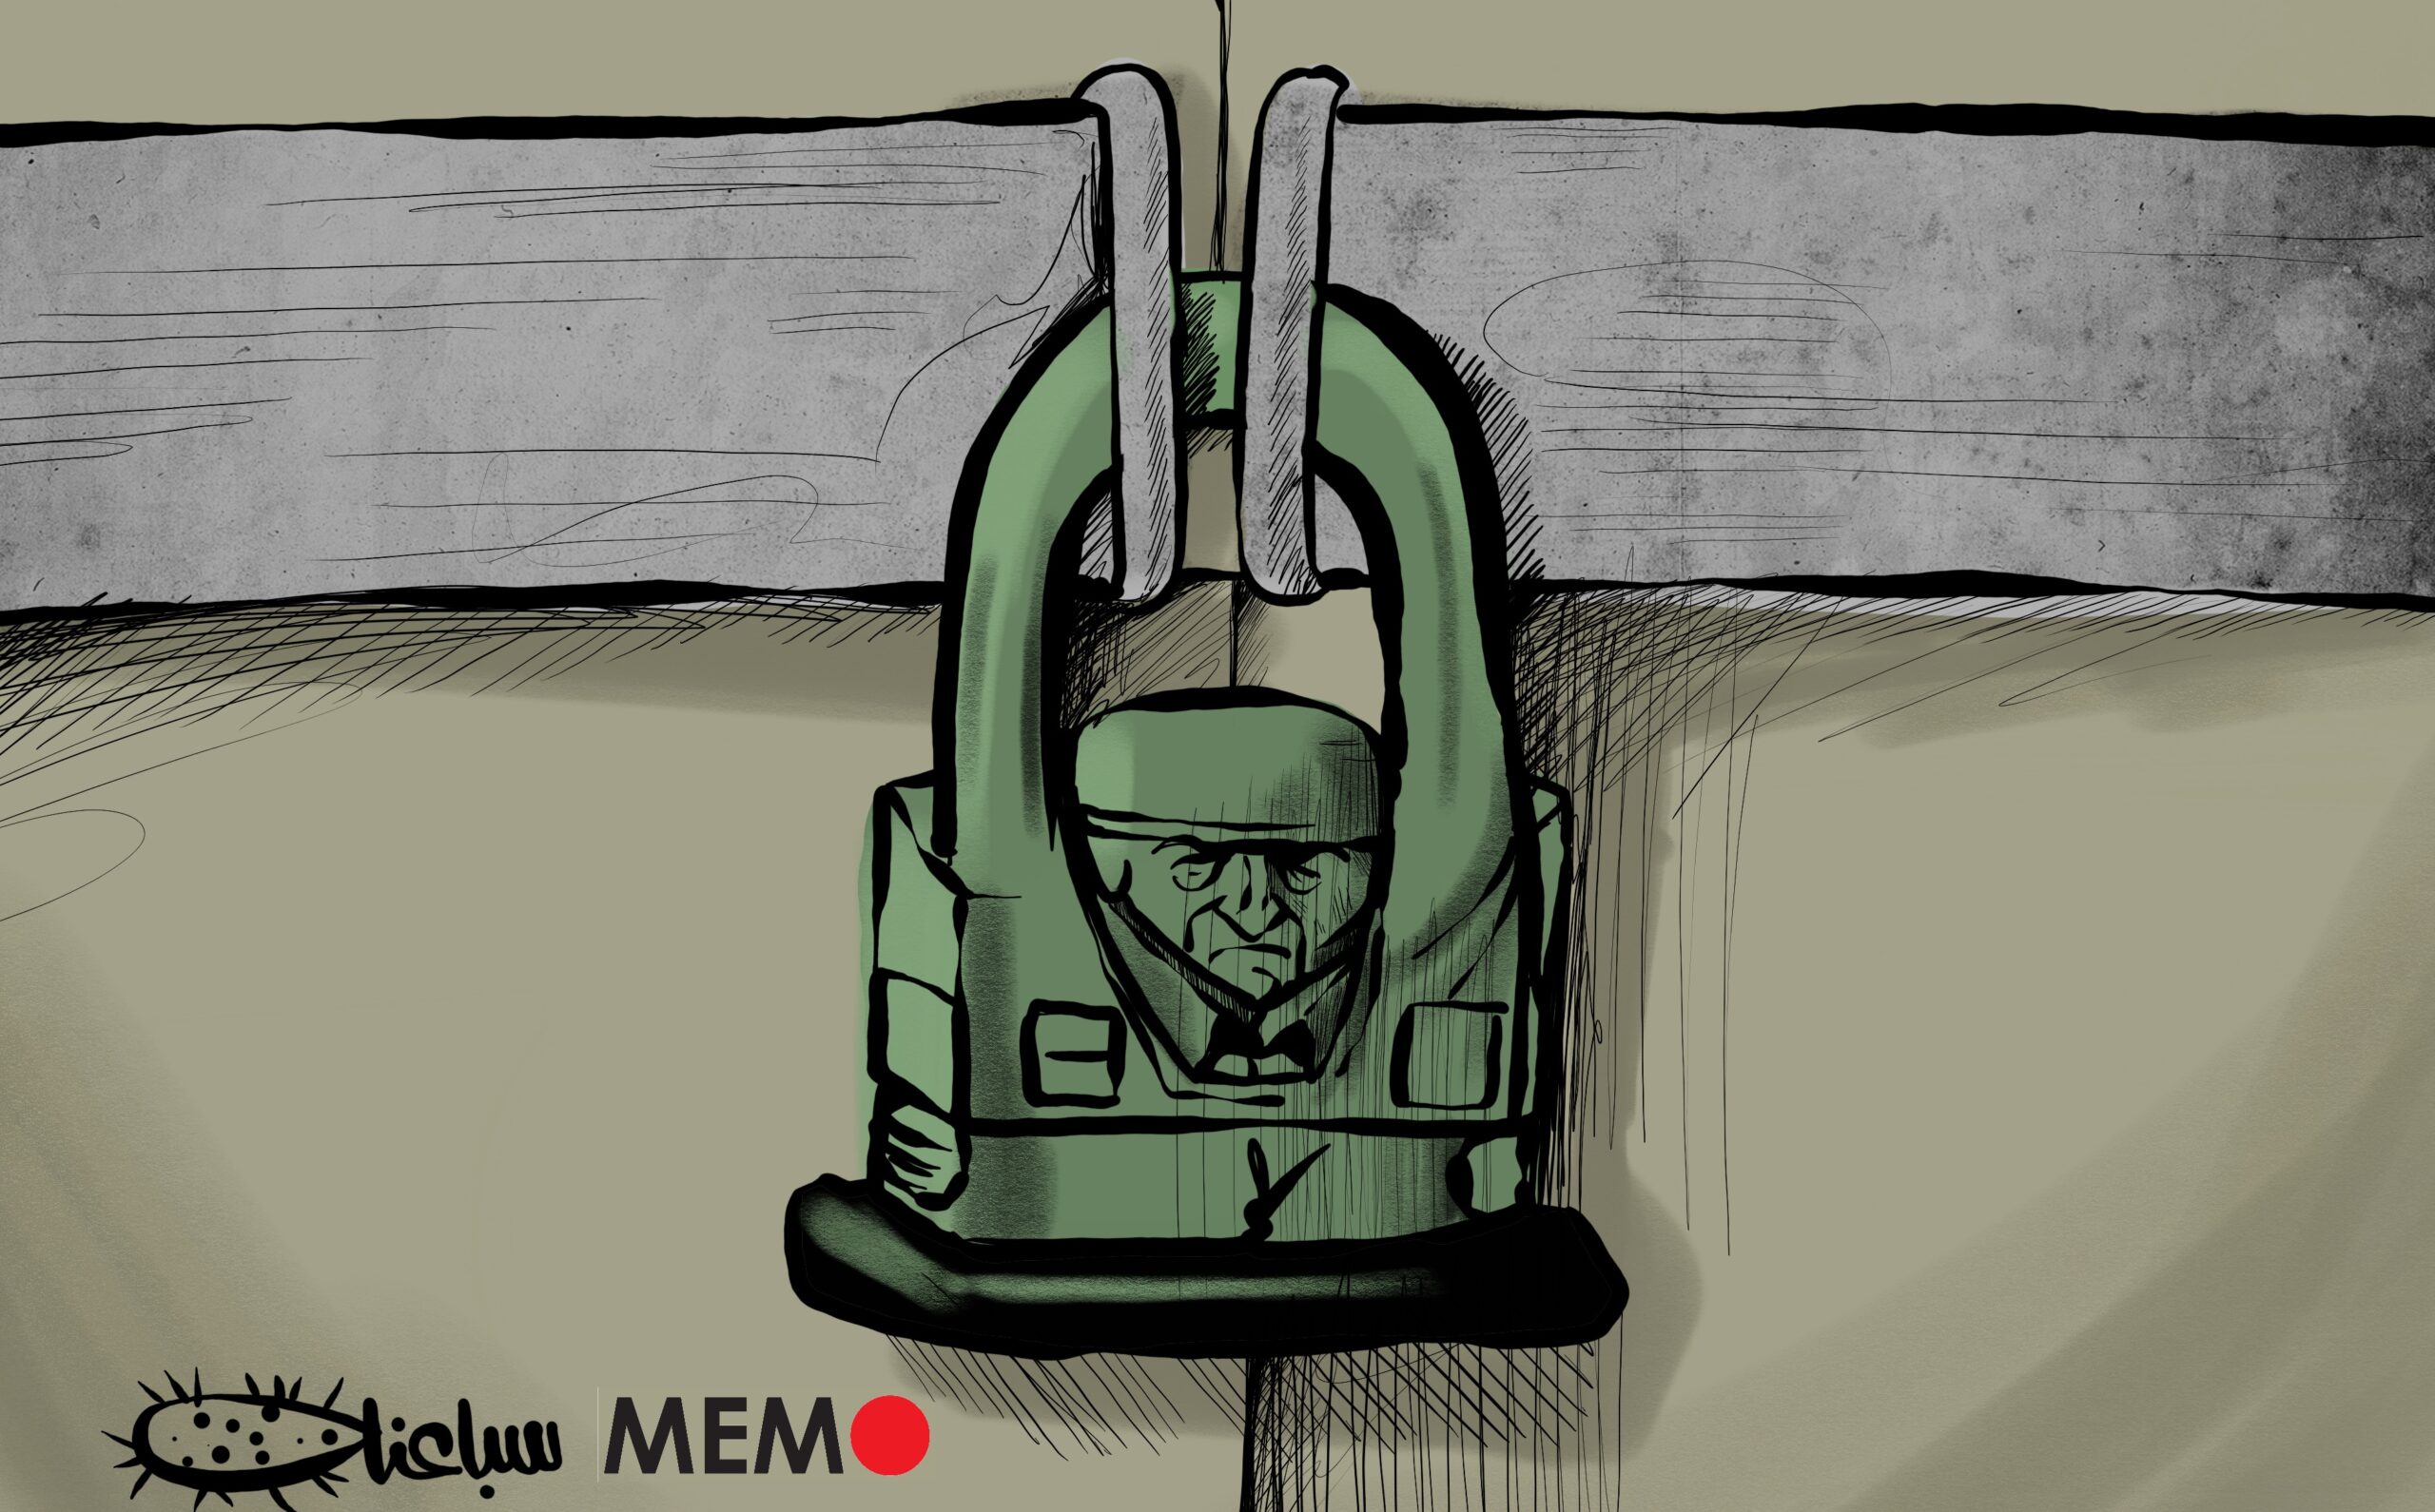 Israel shutdowns Palestinian human rights organisations - Cartoon [Sabaaneh/Middle East Monitor]